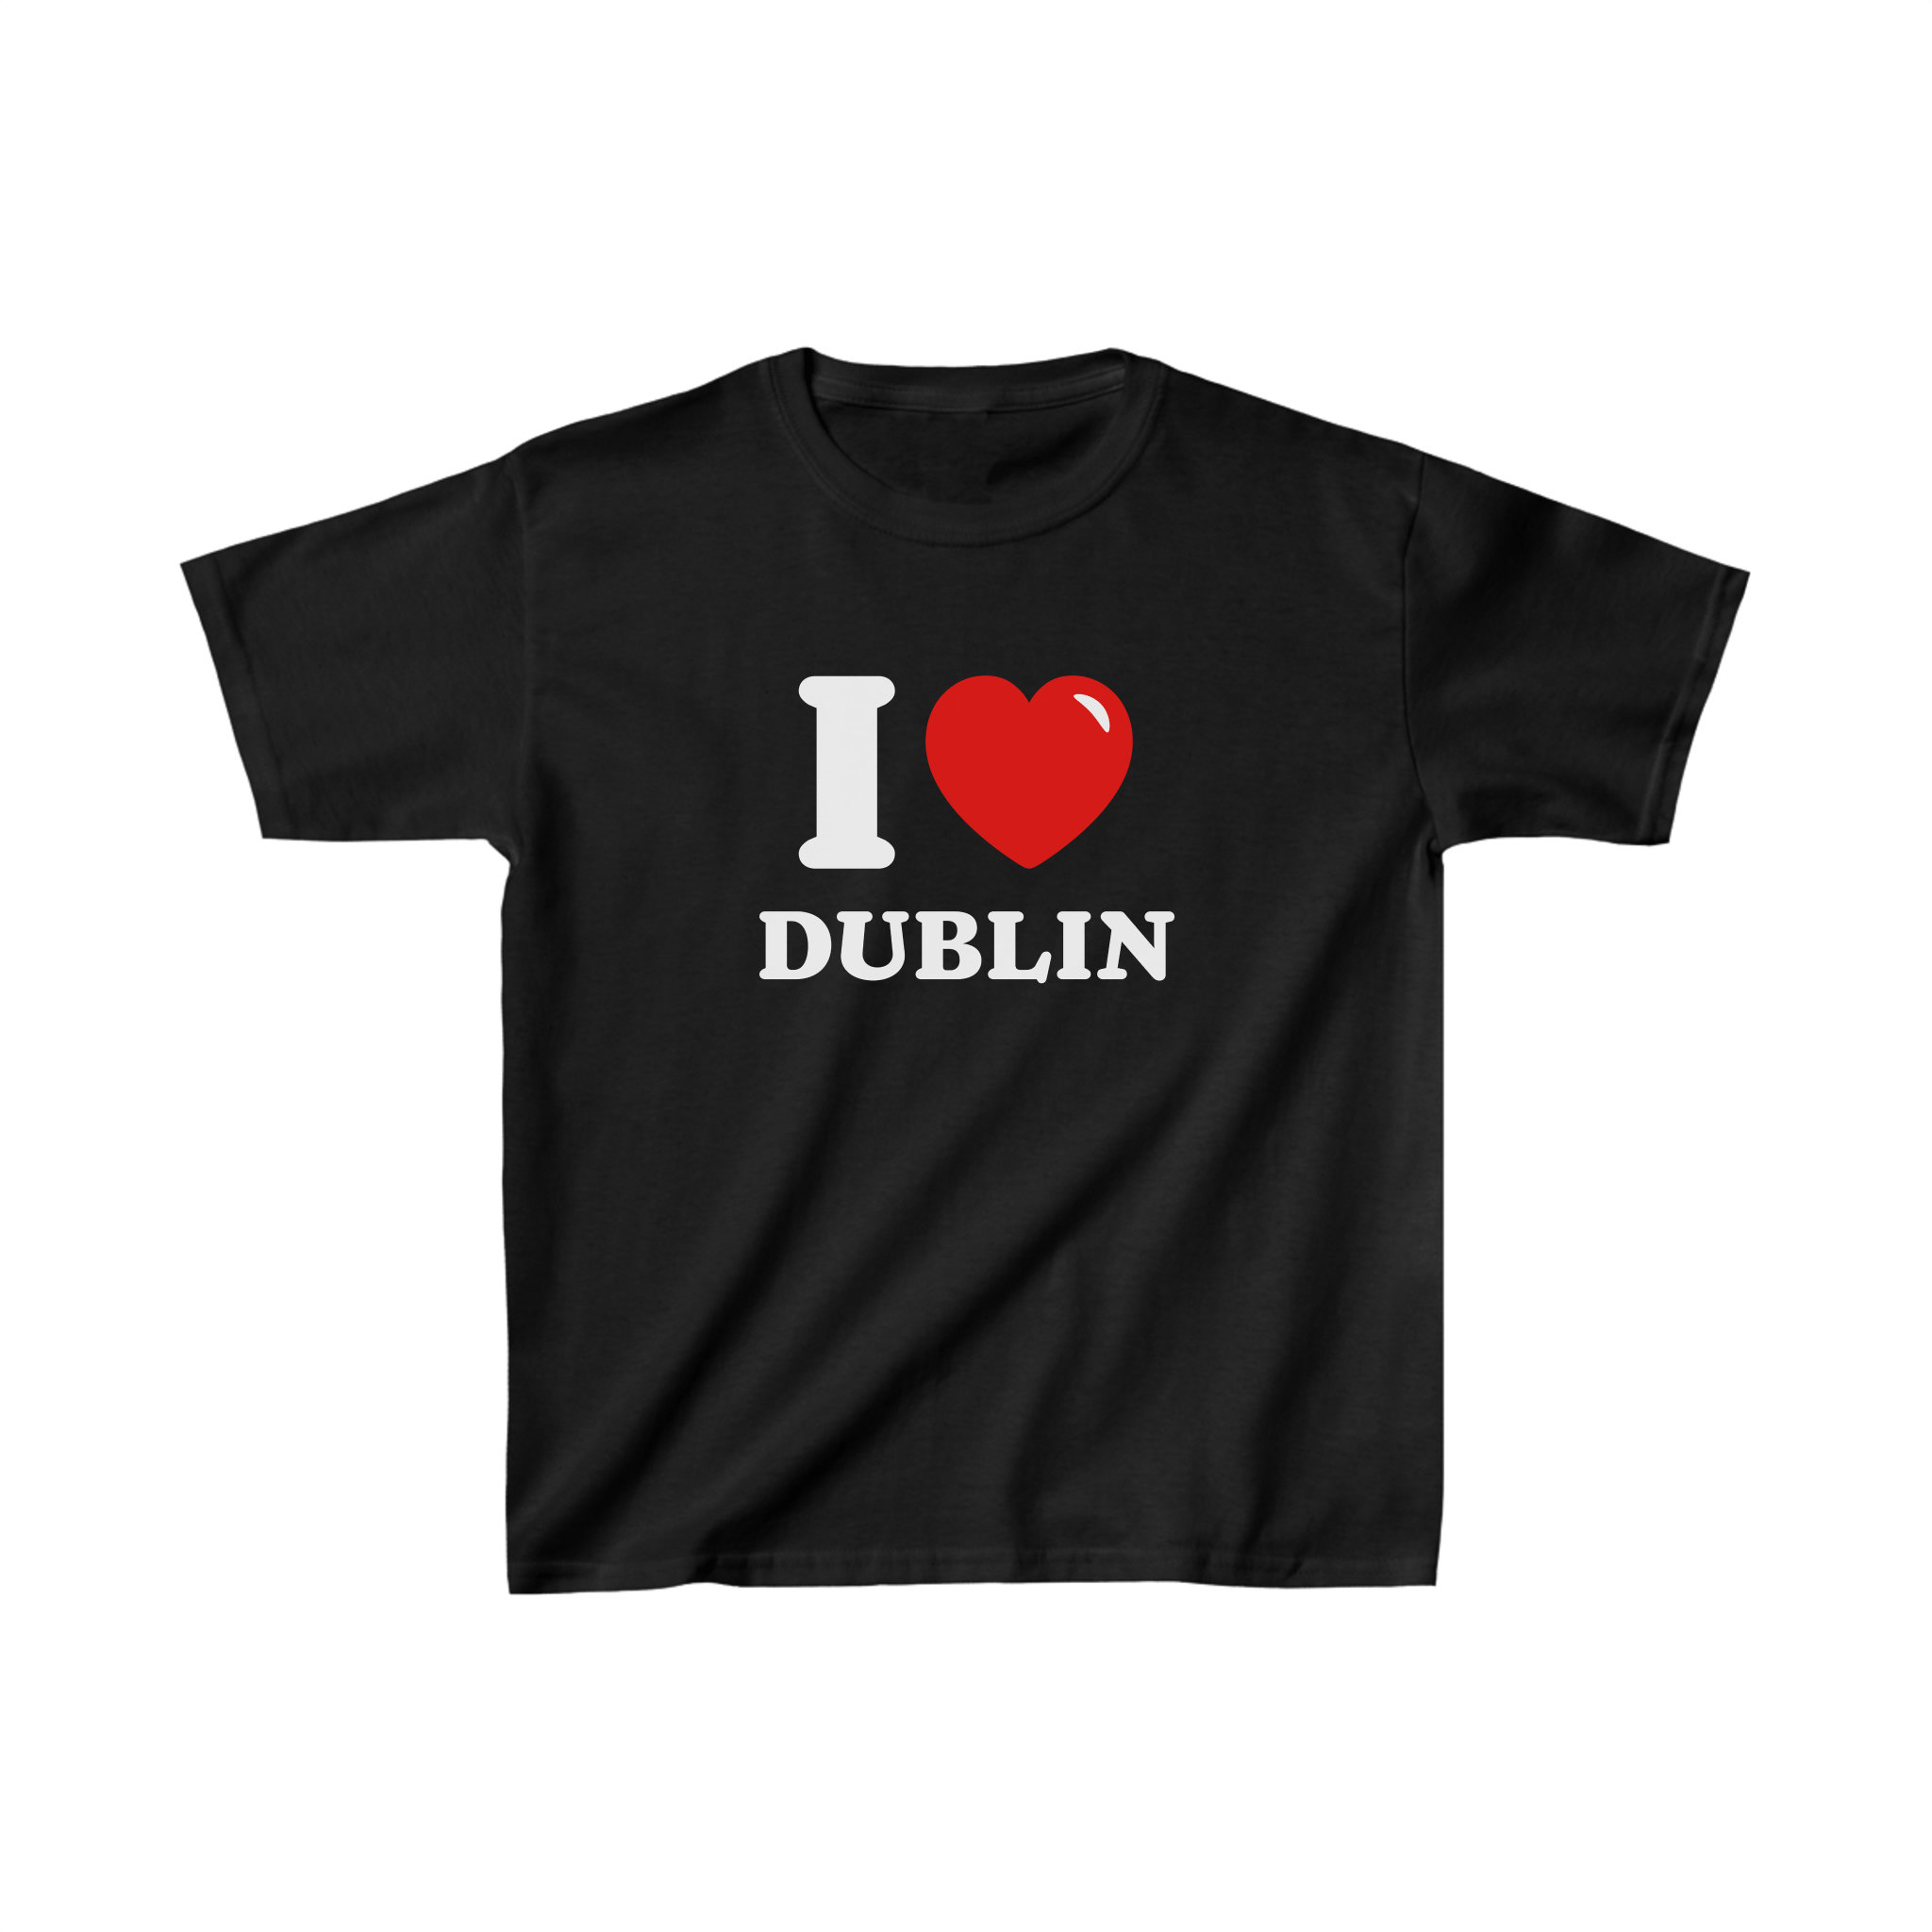 'I love Dublin' baby tee - In Print We Trust